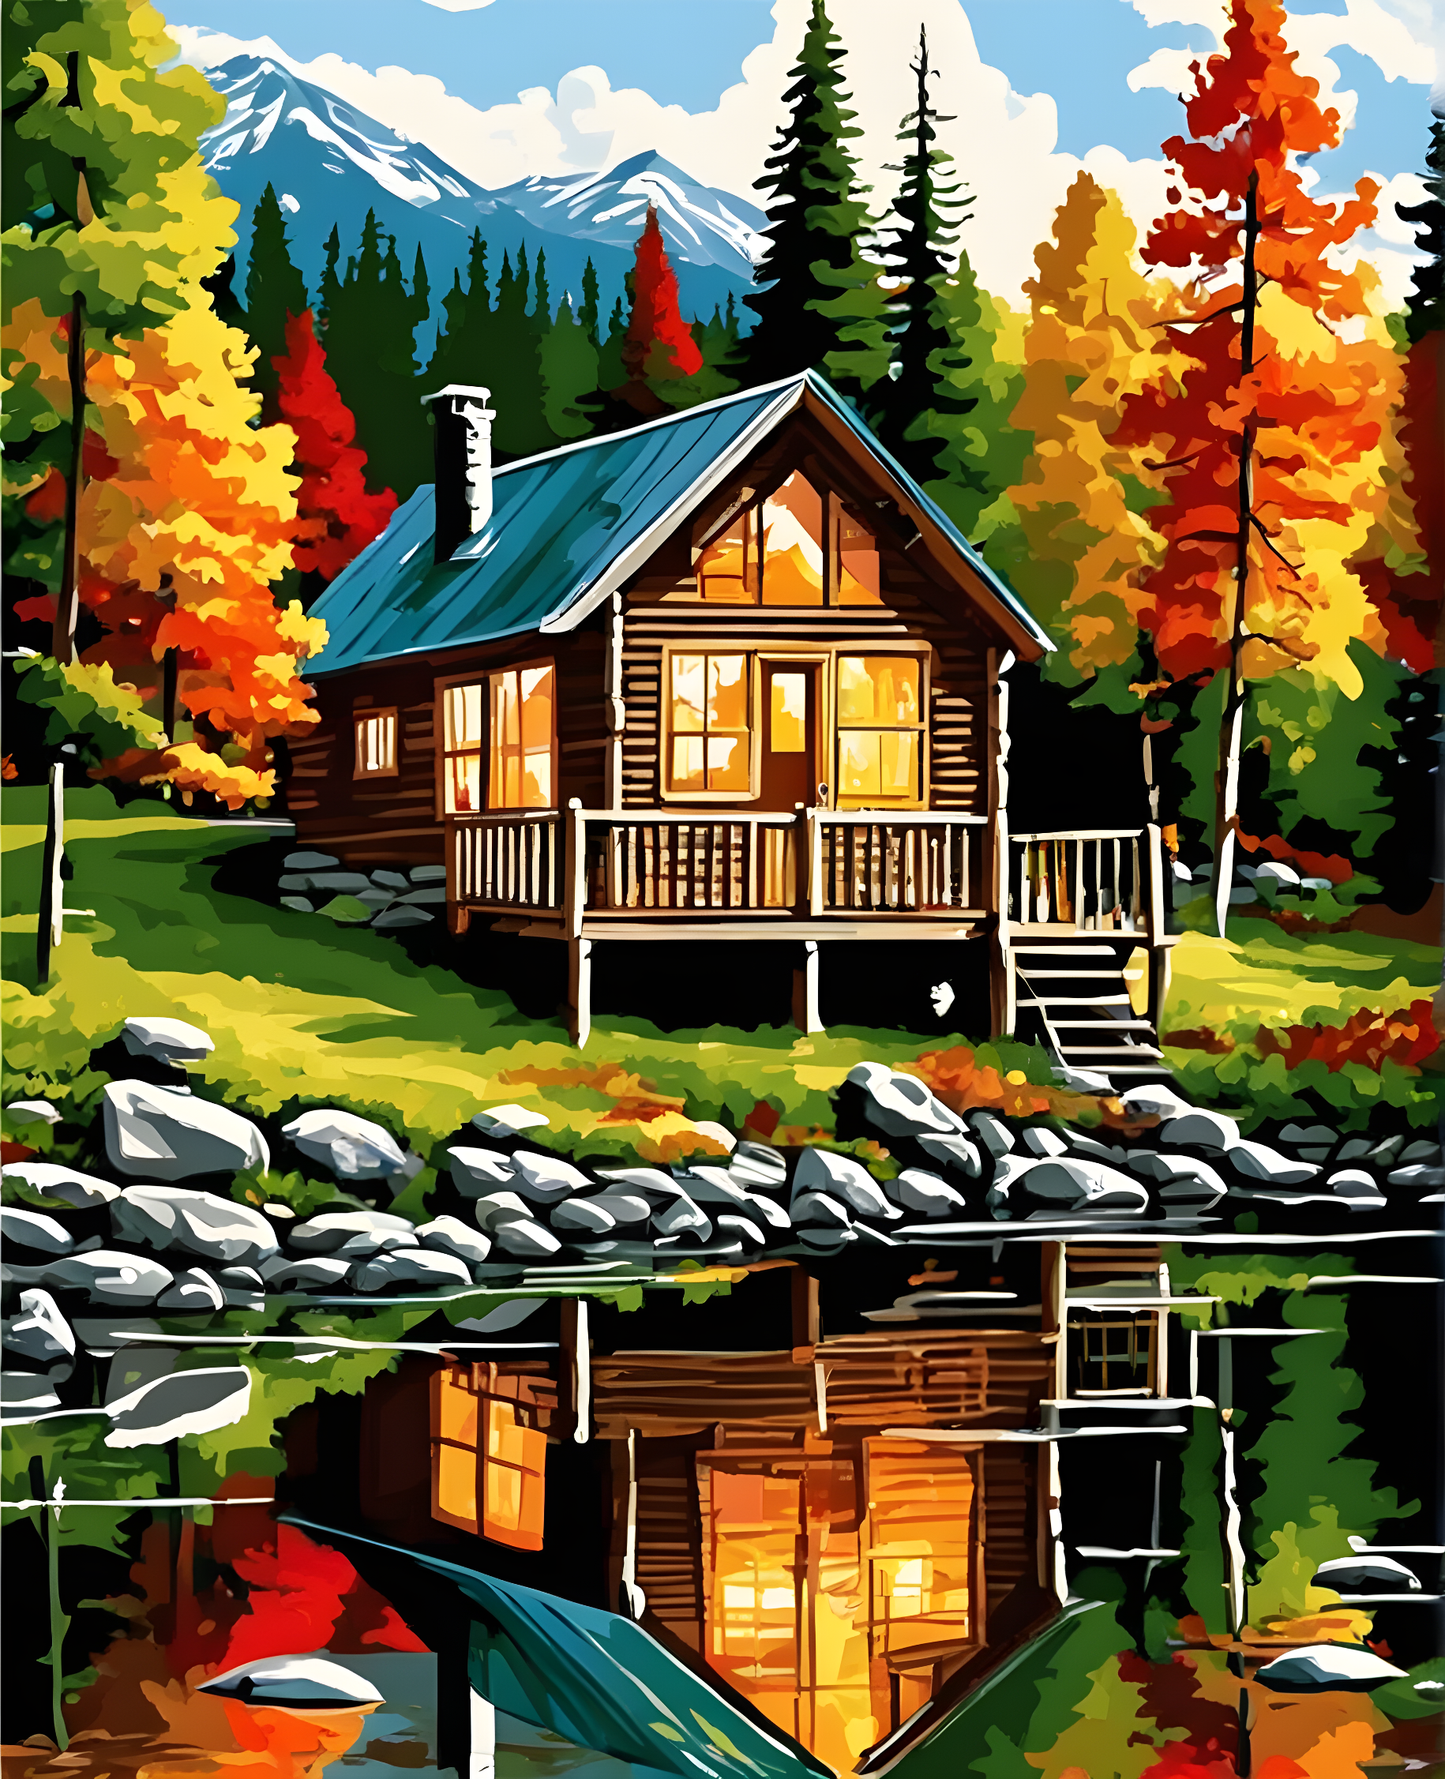 Riverside Cabin in the Woods - Van-Go Paint-By-Number Kit